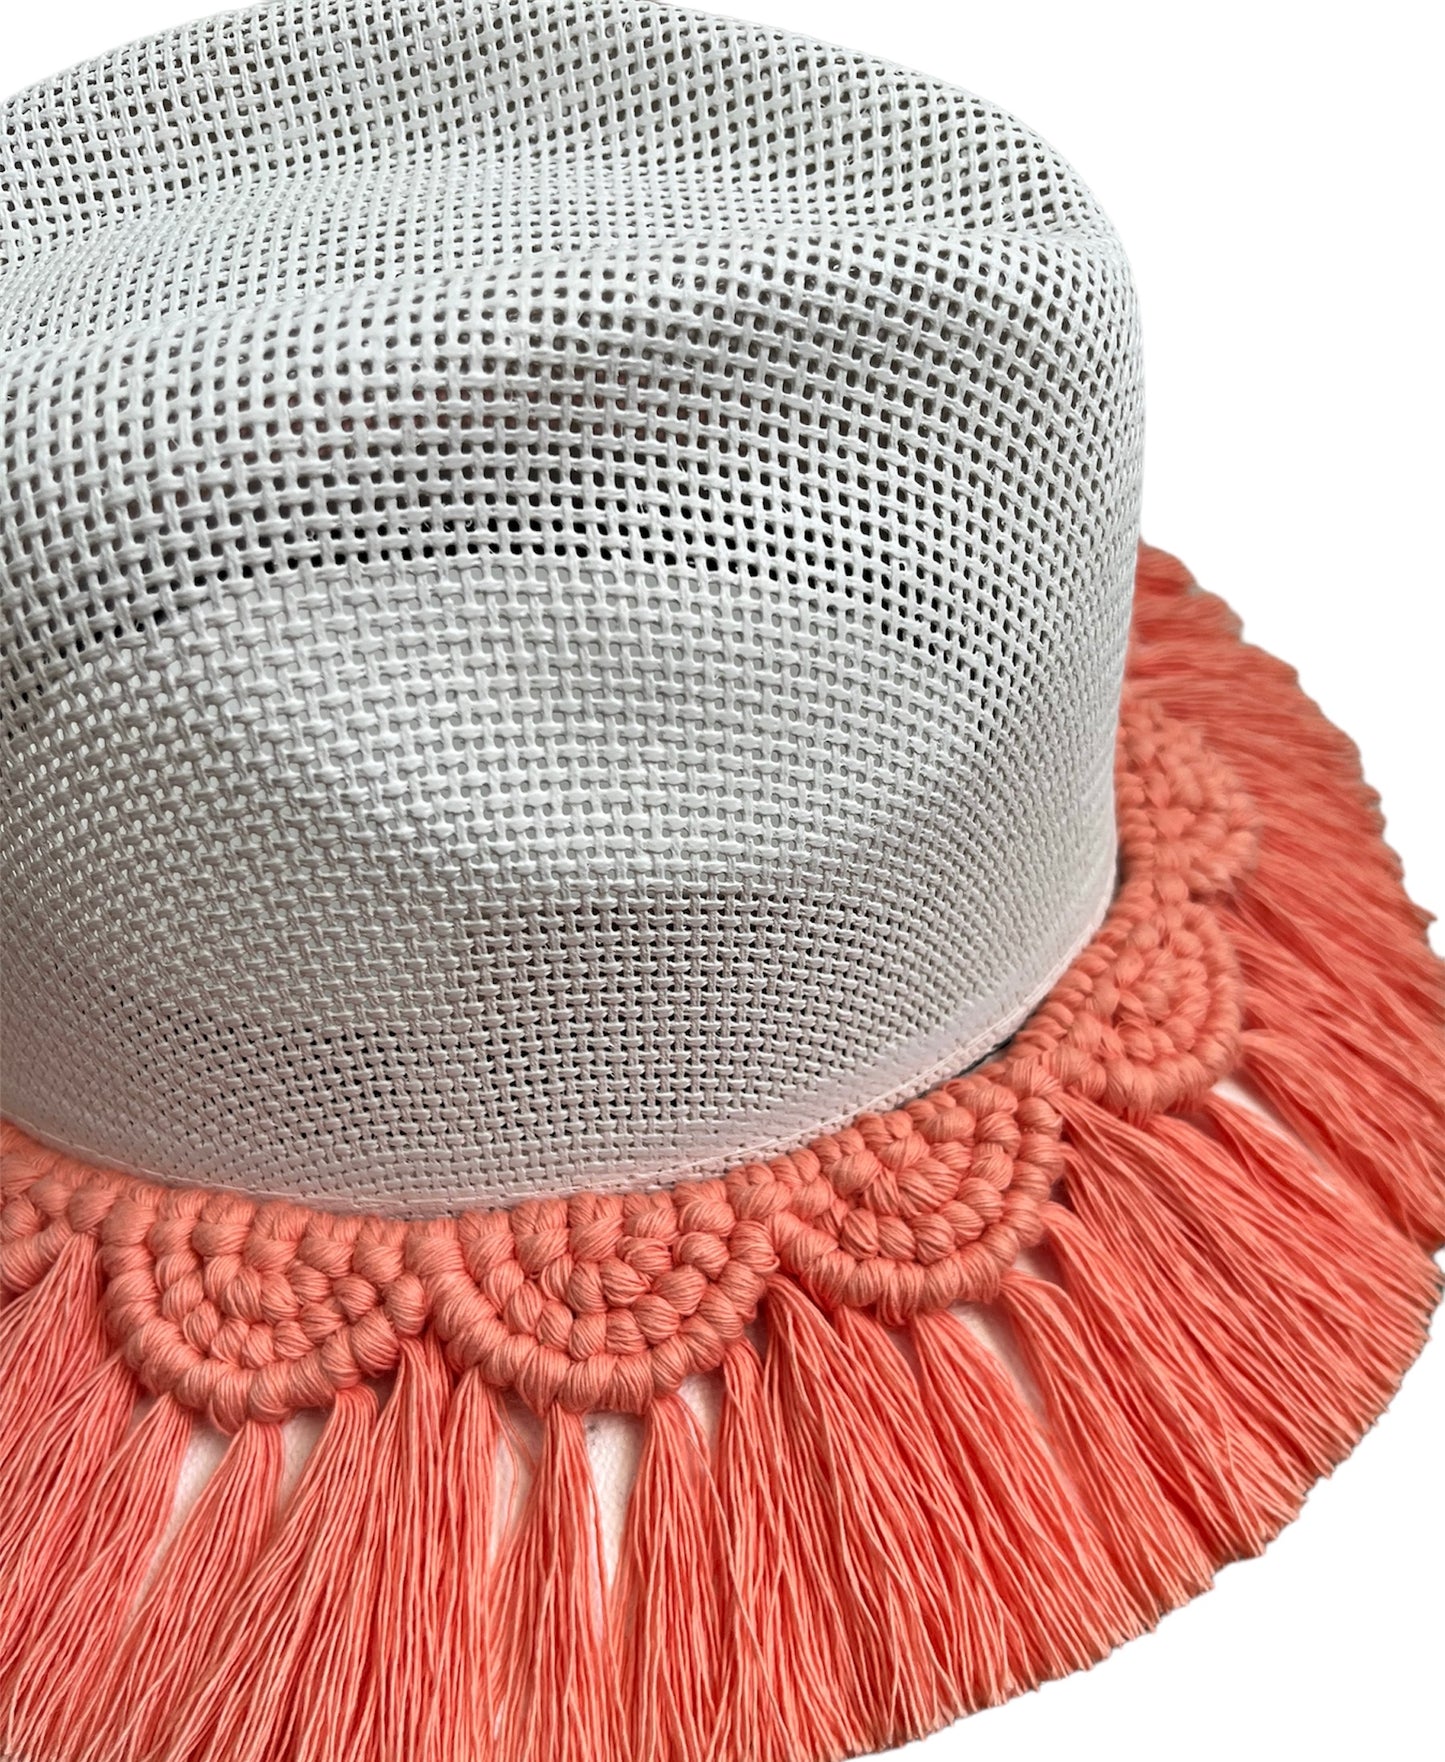 Zanzibar hat with macrame